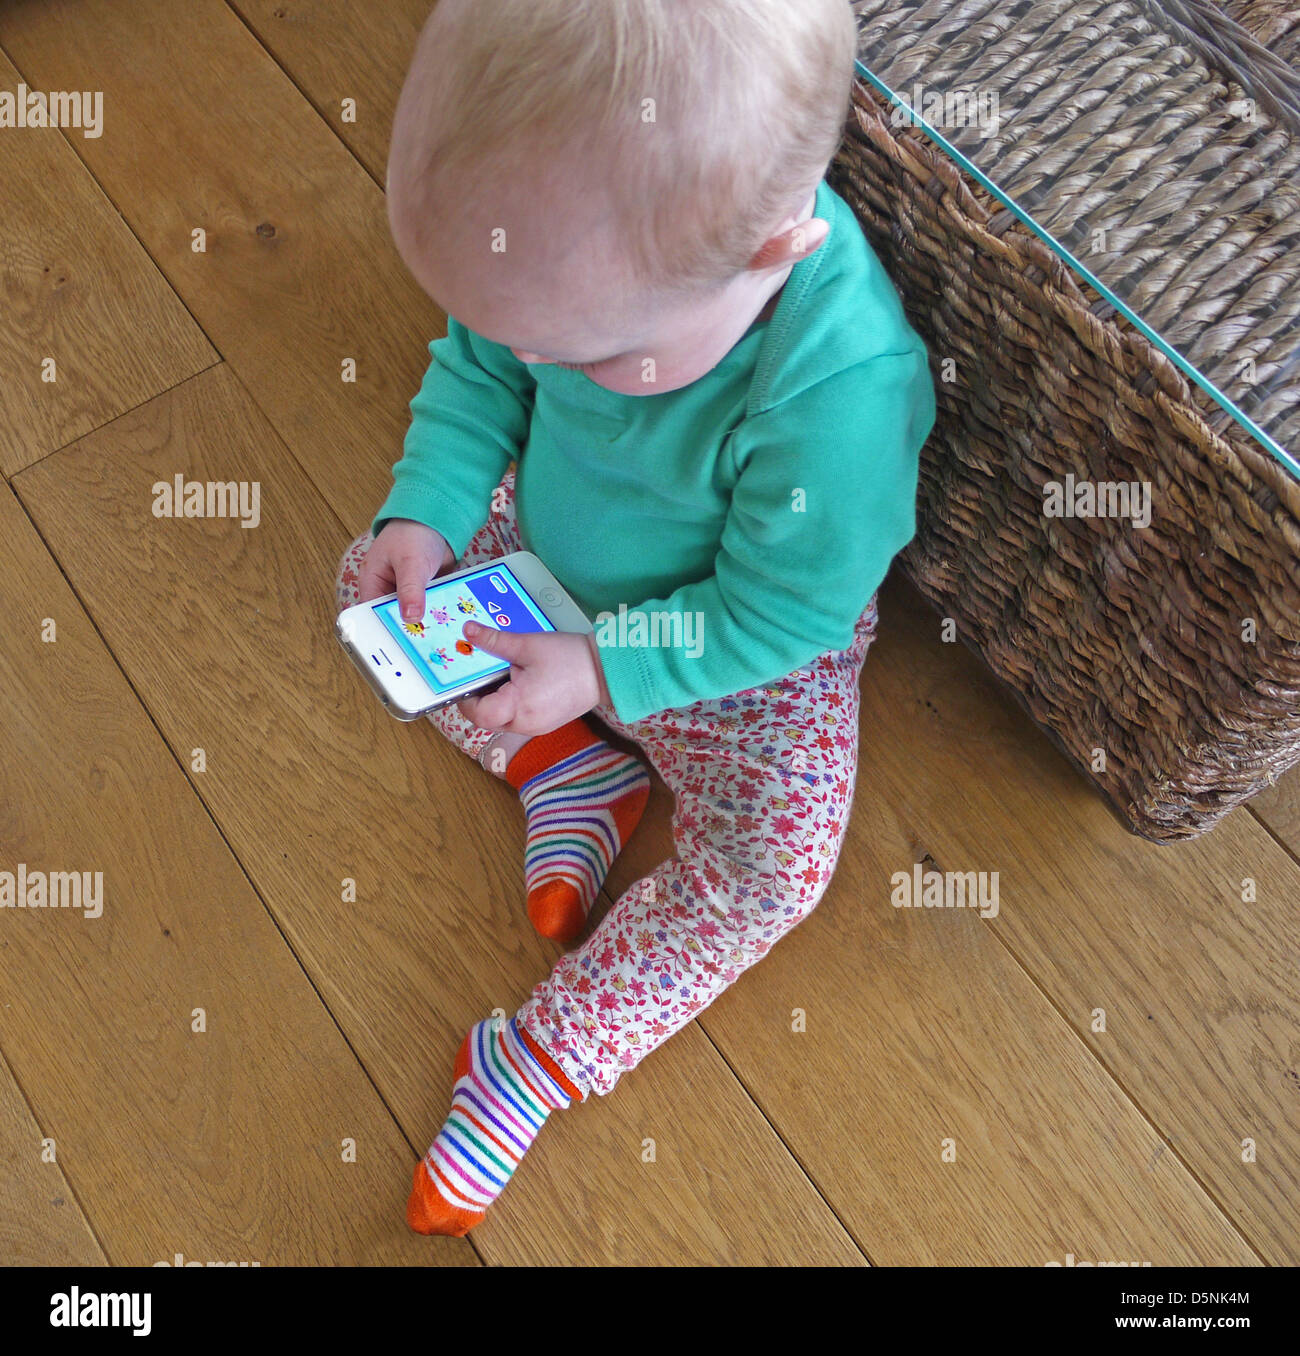 Toddler using an Apple Mac iPhone Stock Photo